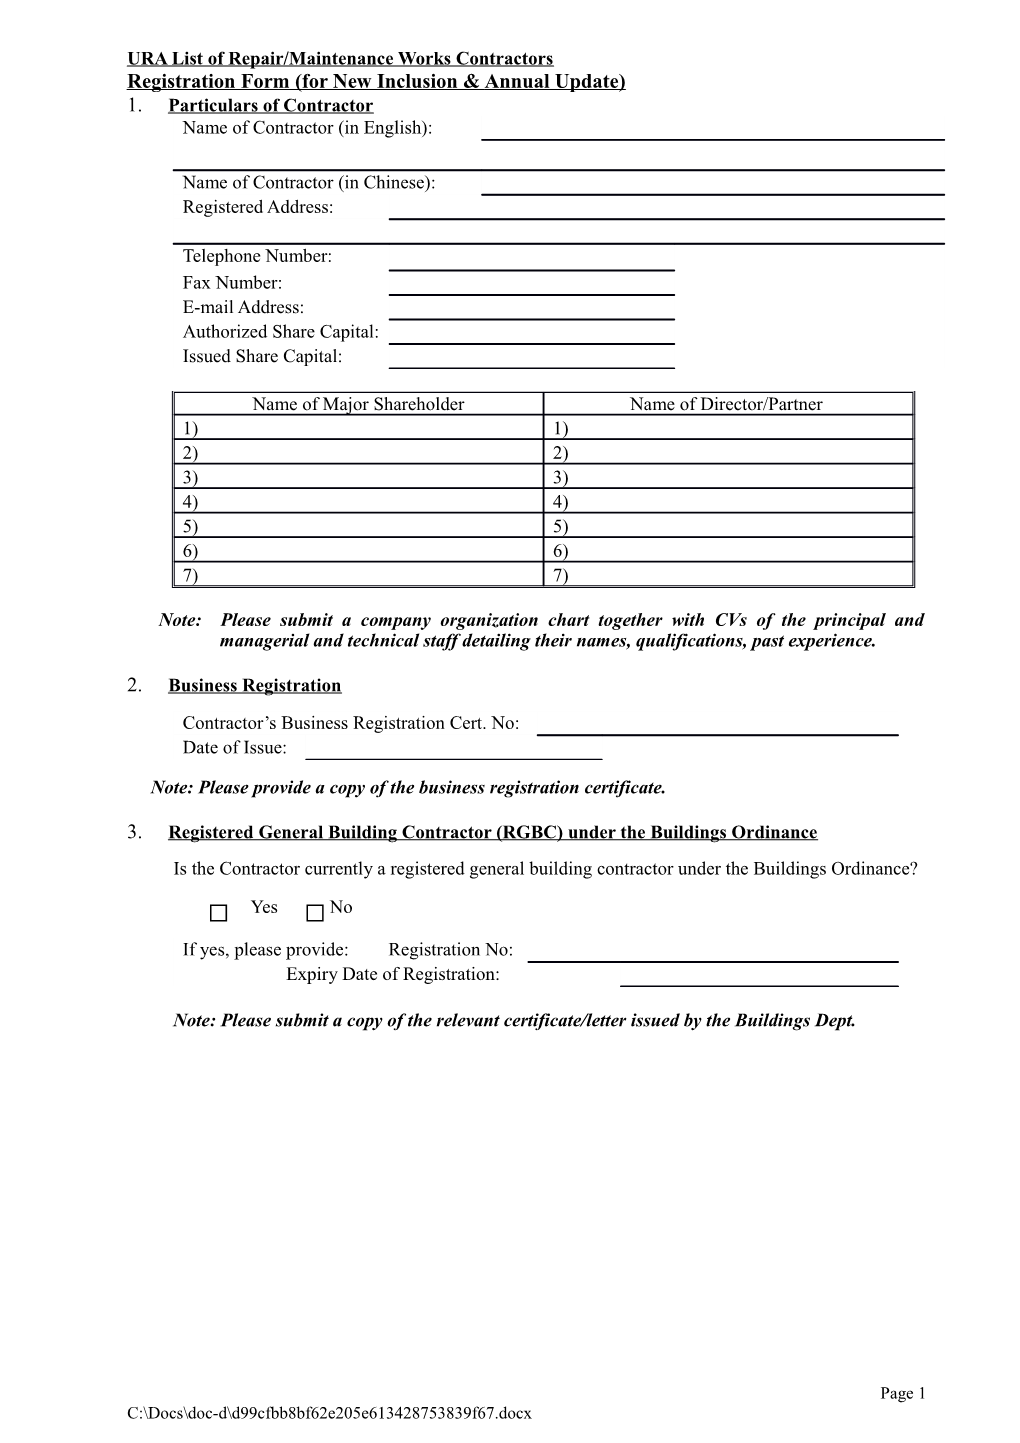 Application for Inclusion in URA Demolition Contractor List